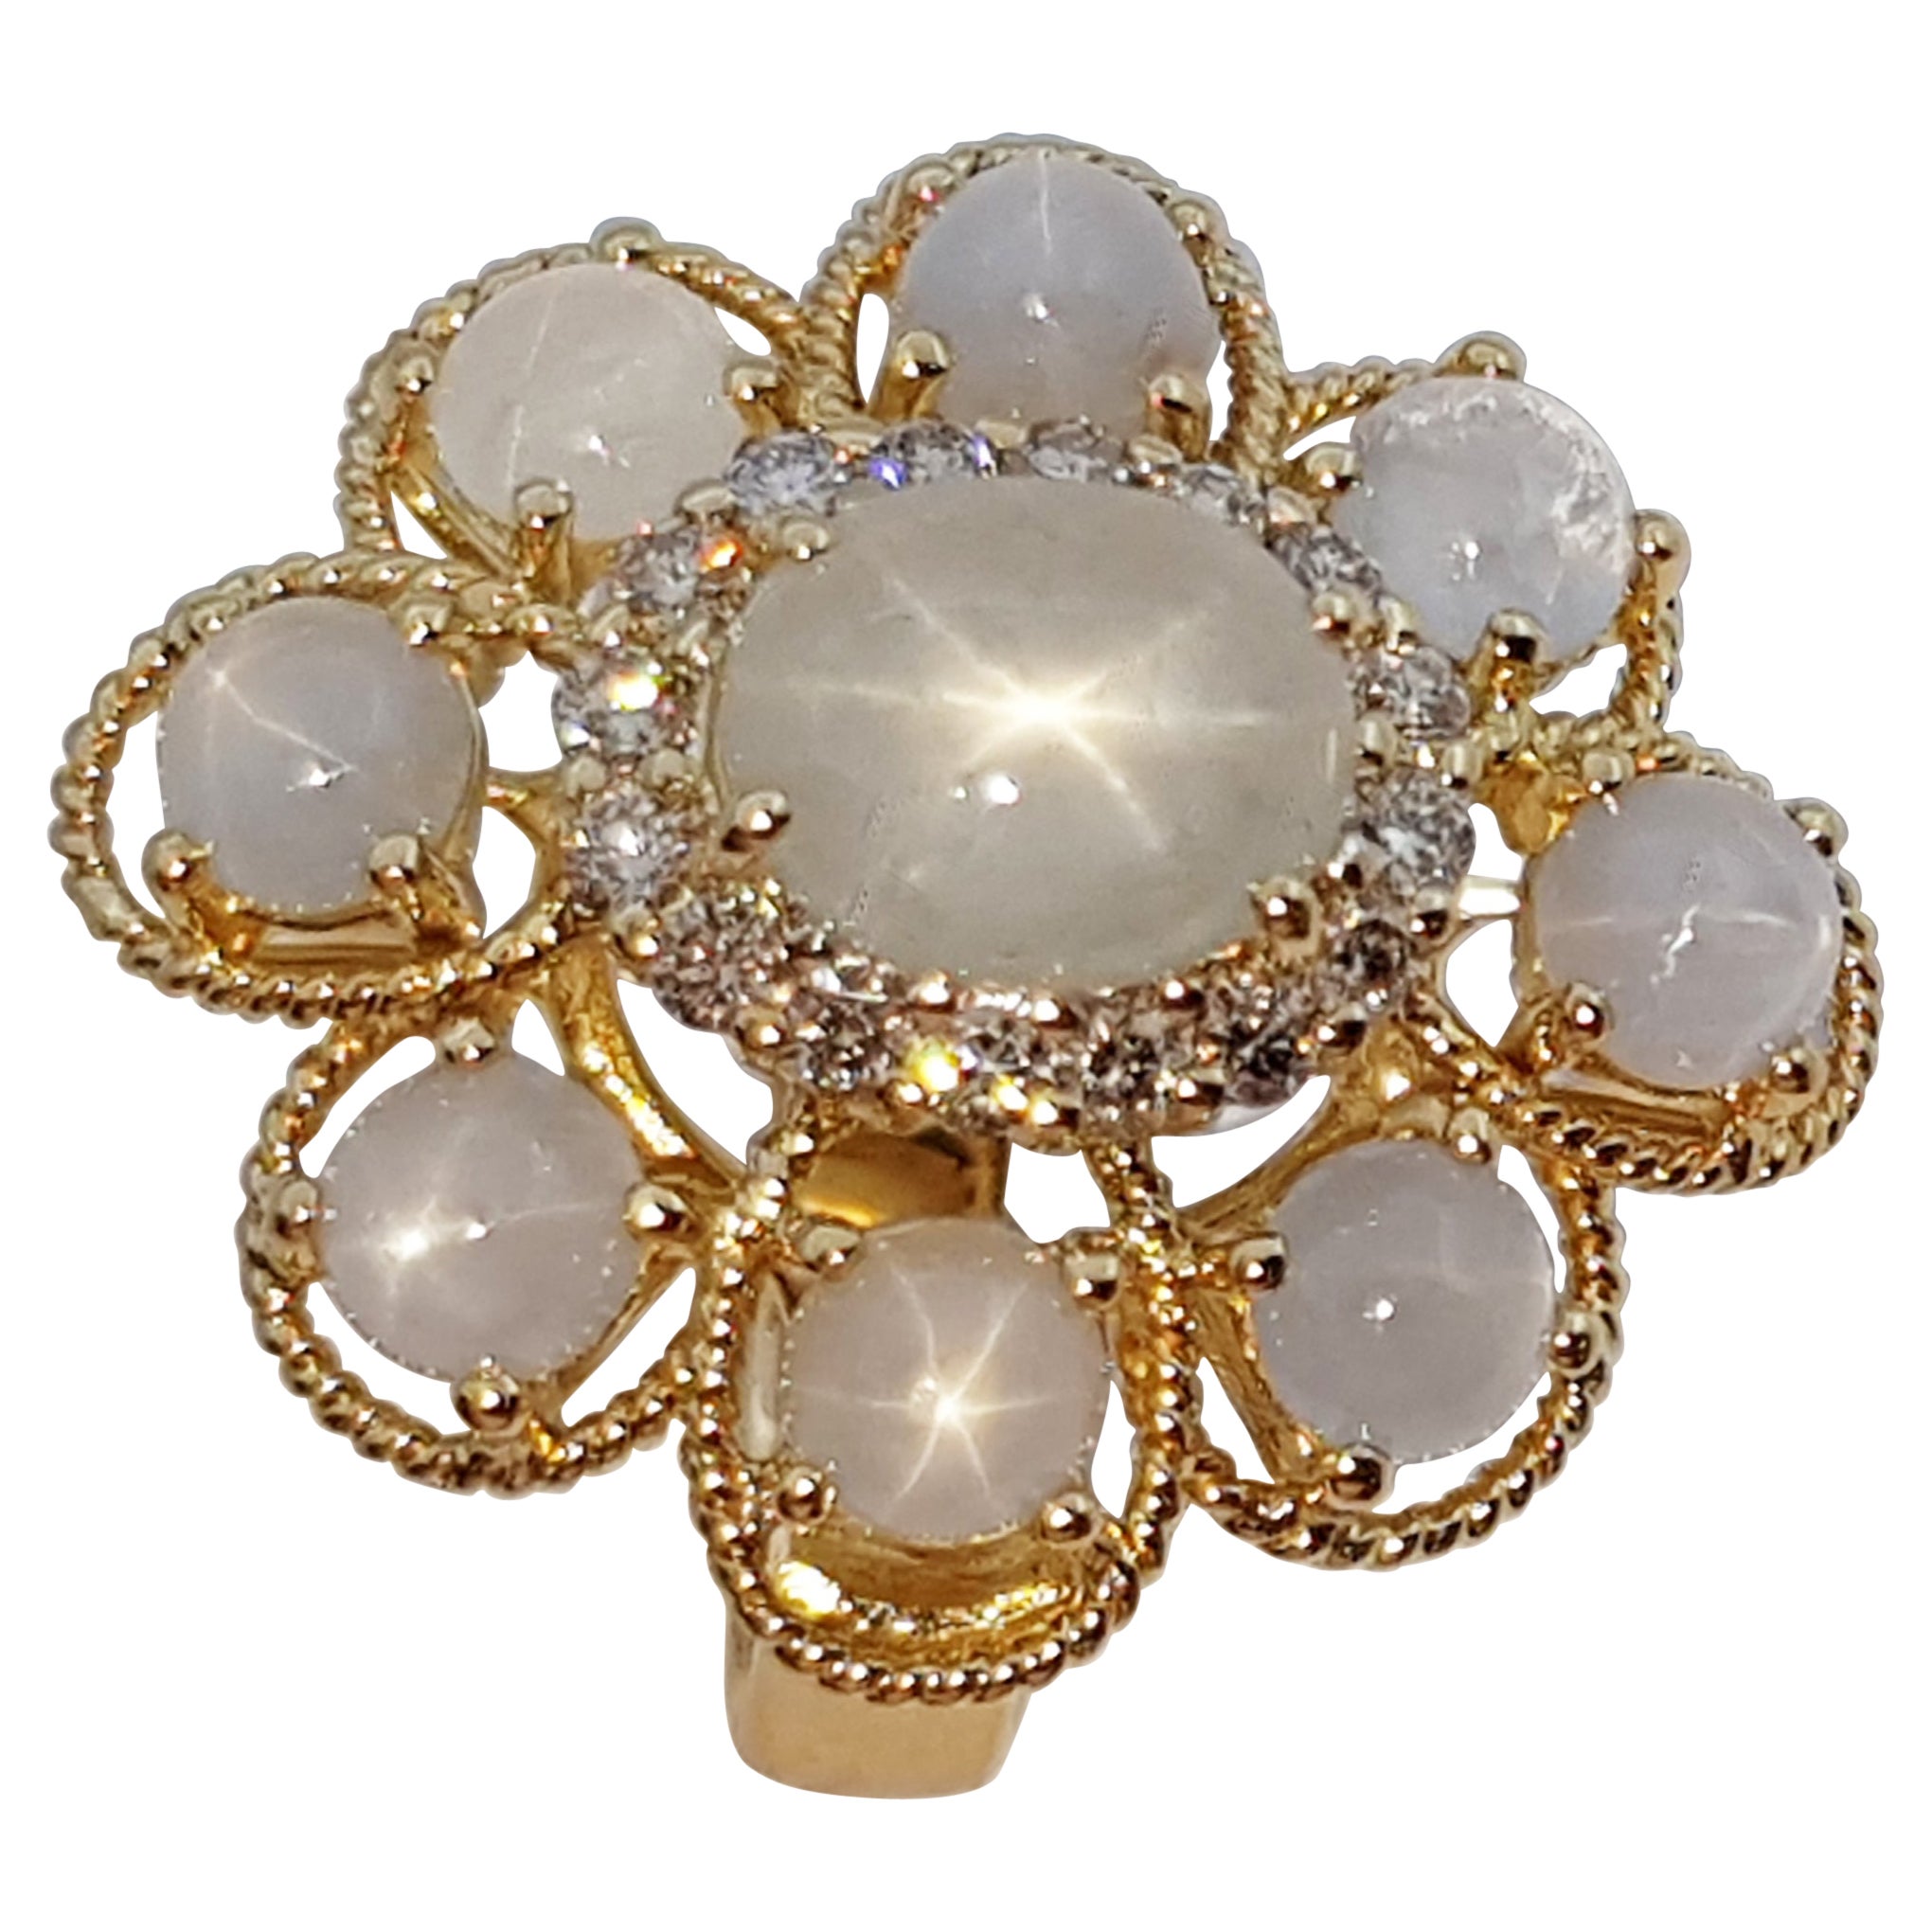 Blue Star Sapphire with Diamond Ring Set in 18 Karat Gold Settings